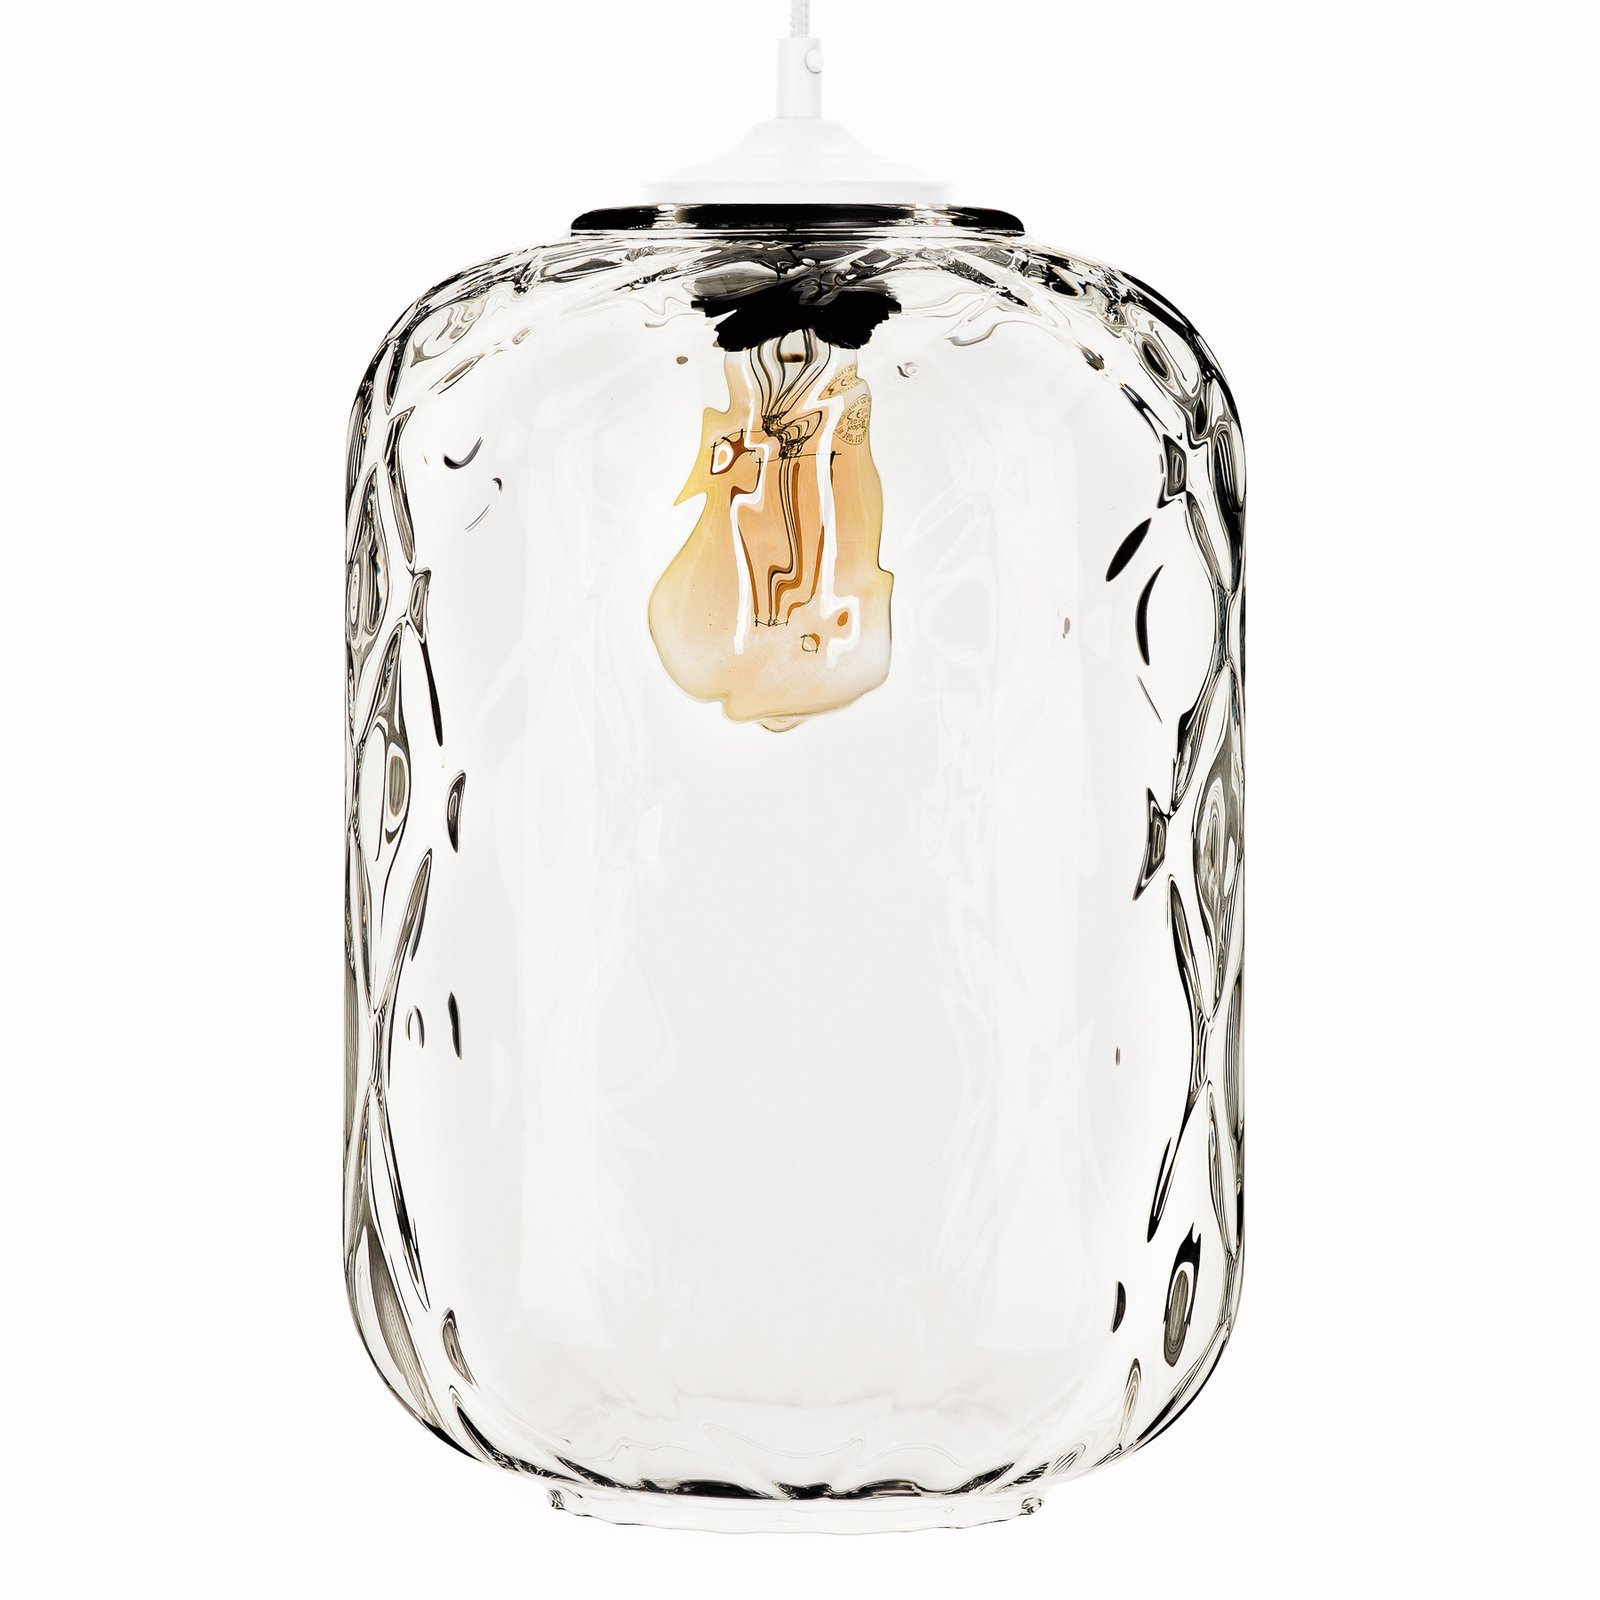 Tezeusz pendant light with clear glass shade Ø 24cm